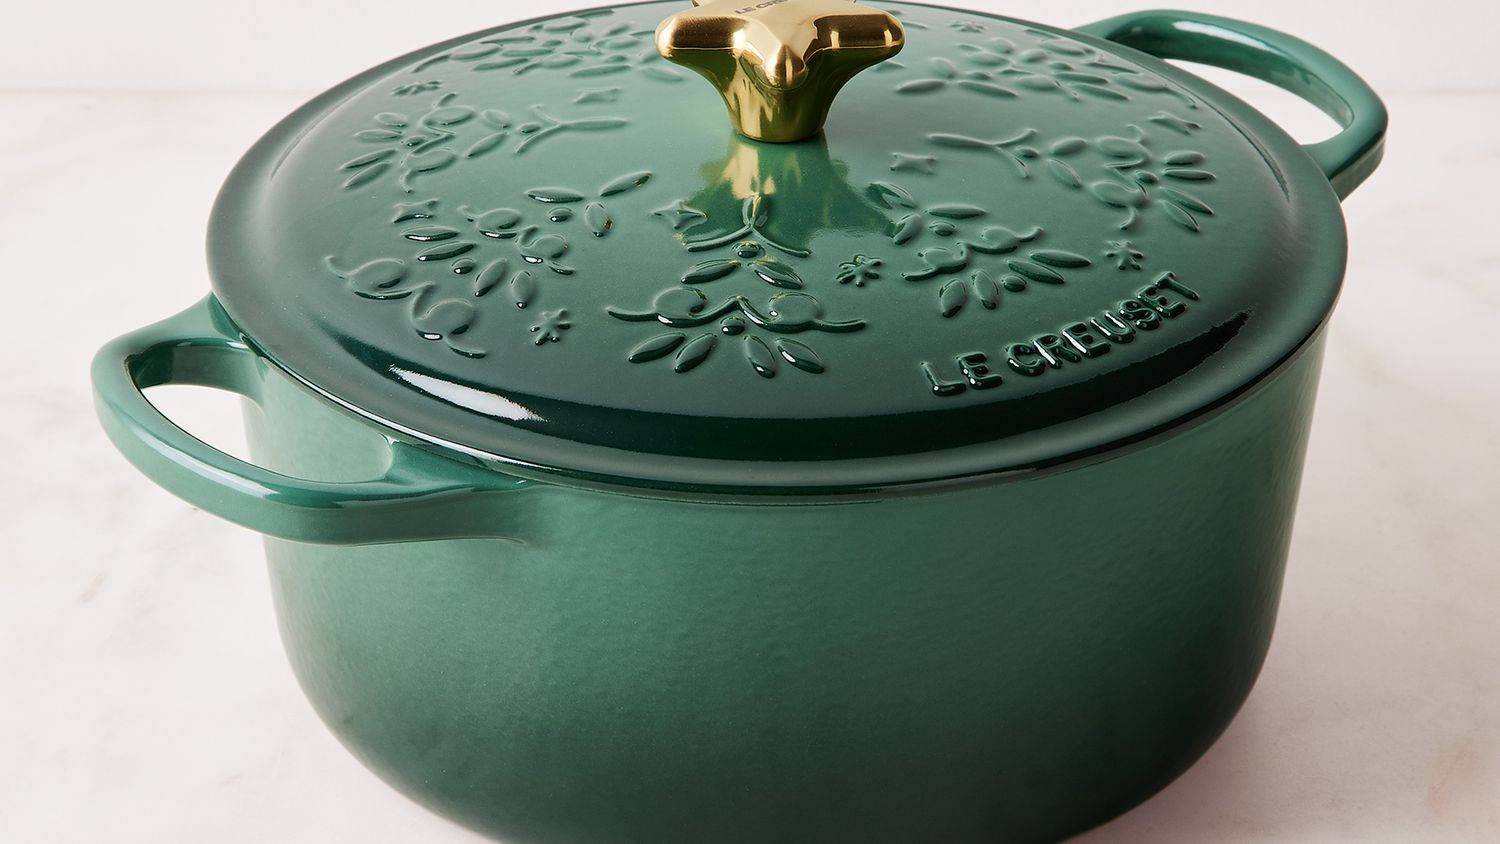 Le Creuset Signature Enameled Cast Iron Round Dutch Oven, 4.5-Quart, 7  Colors on Food52